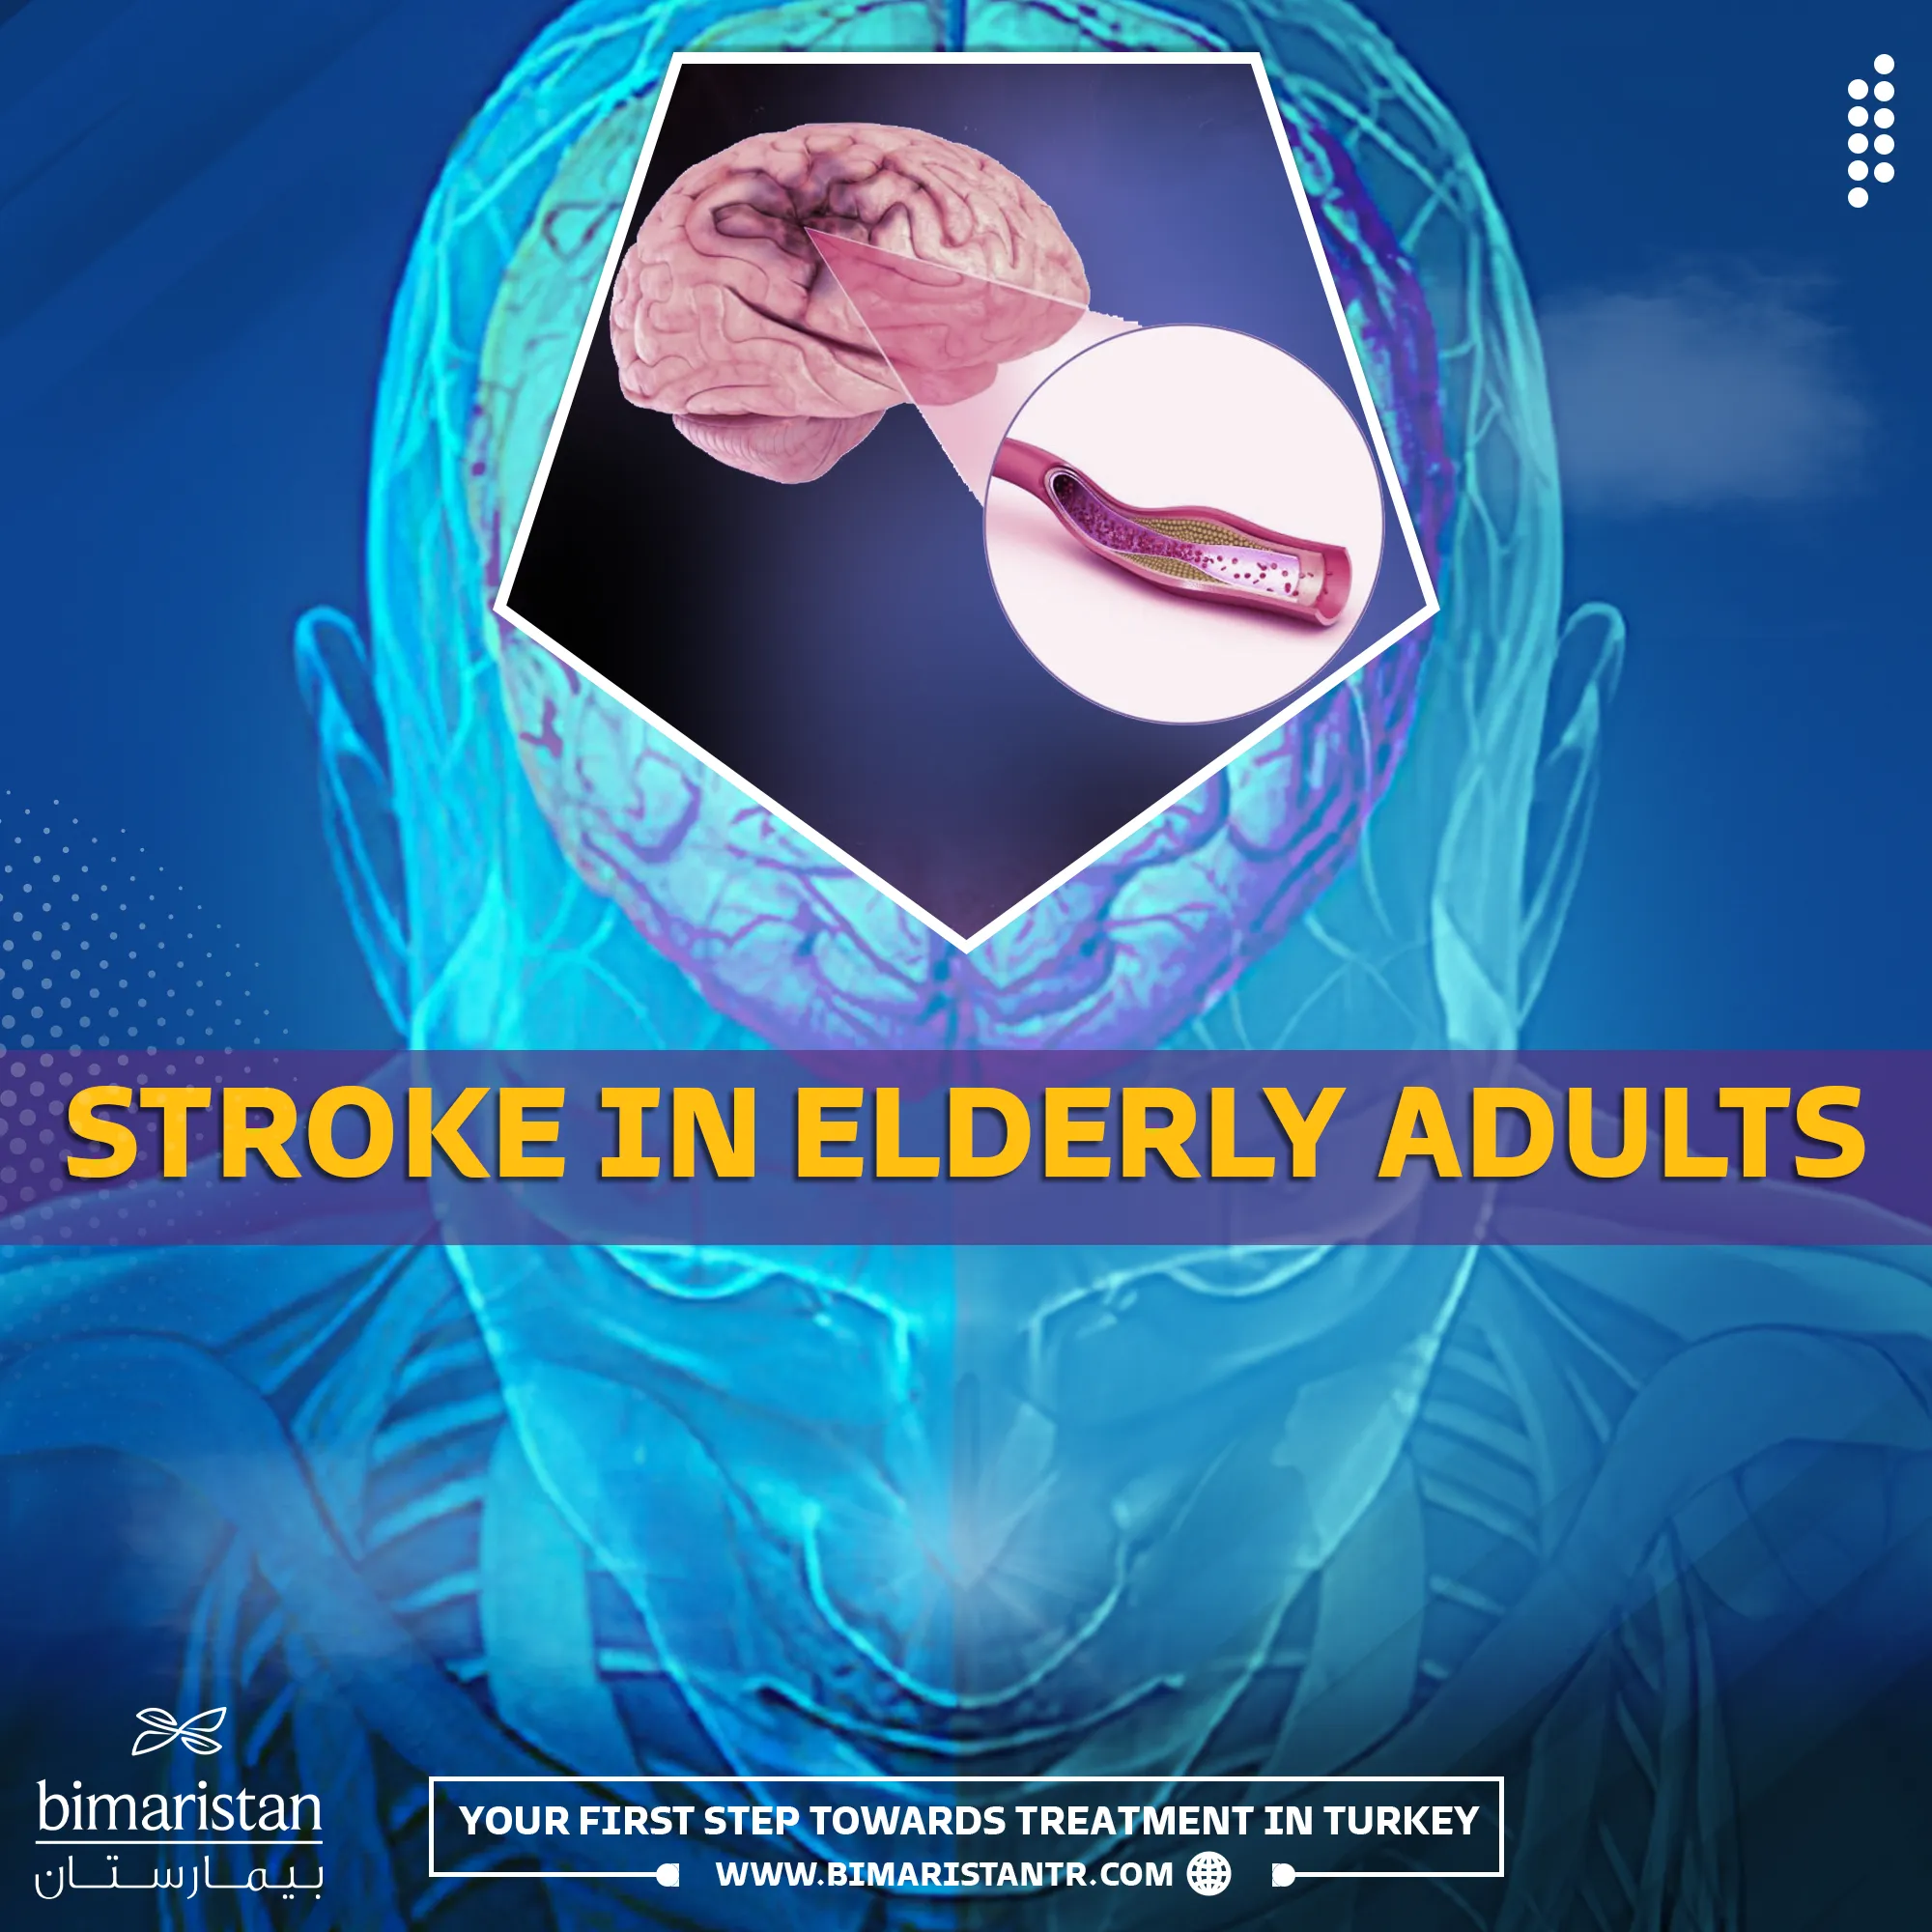 Ischemic stroke in the elderly